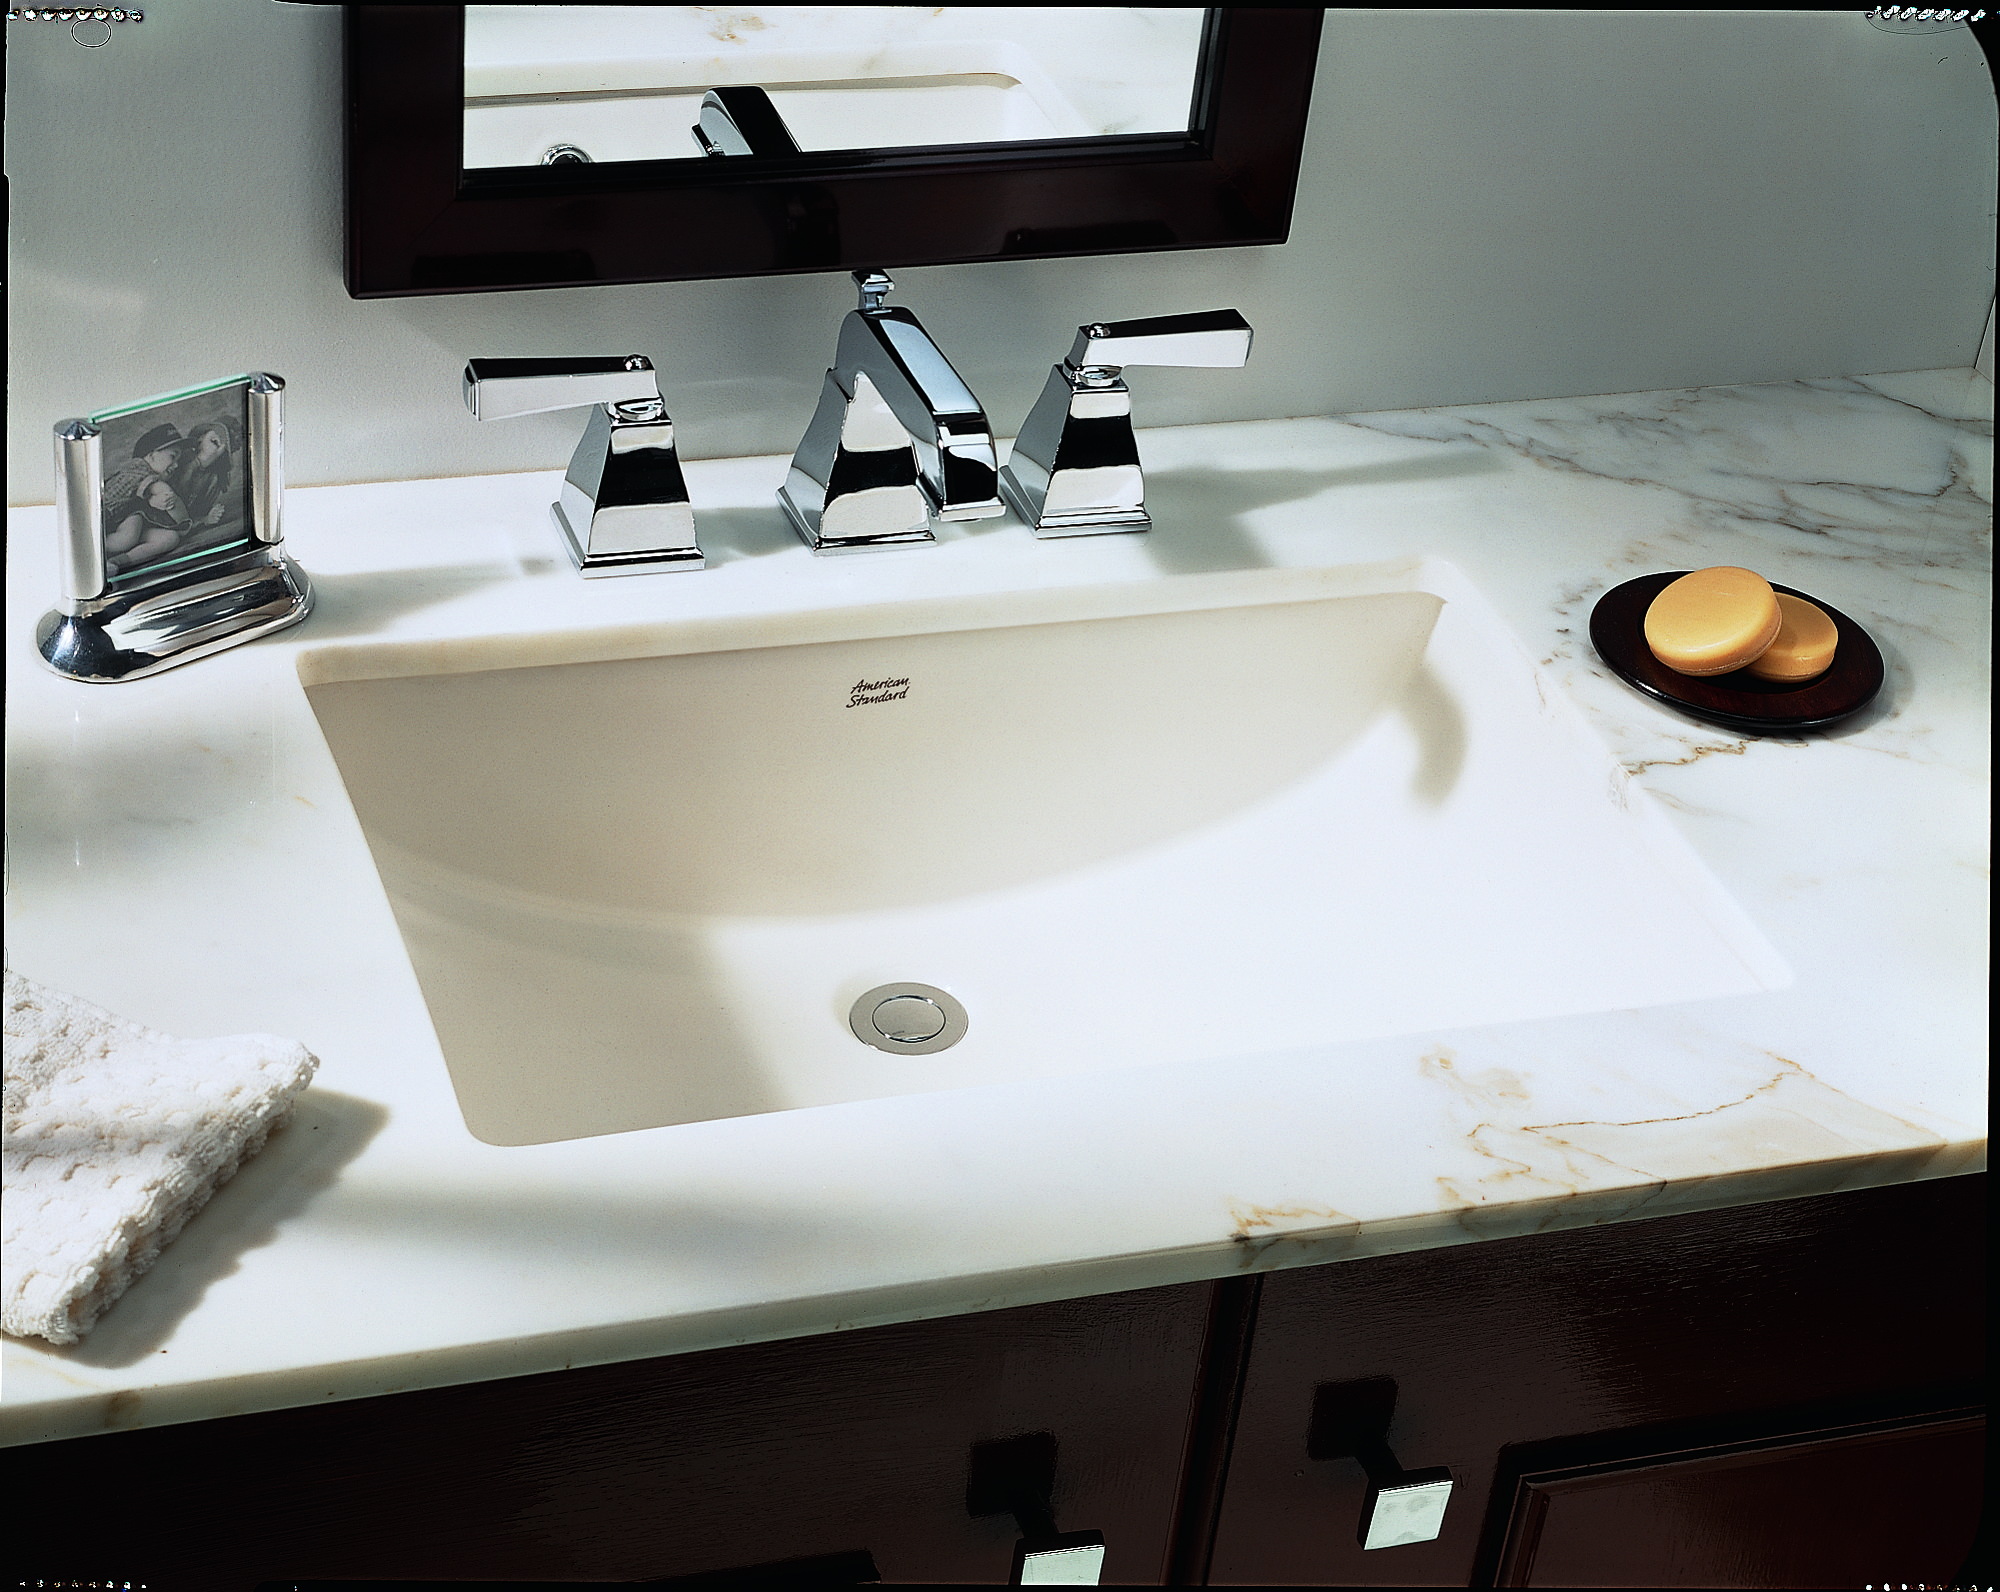 American Standard Studio Ceramic Rectangular Undermount Bathroom Sink With Overflow Reviews Wayfair